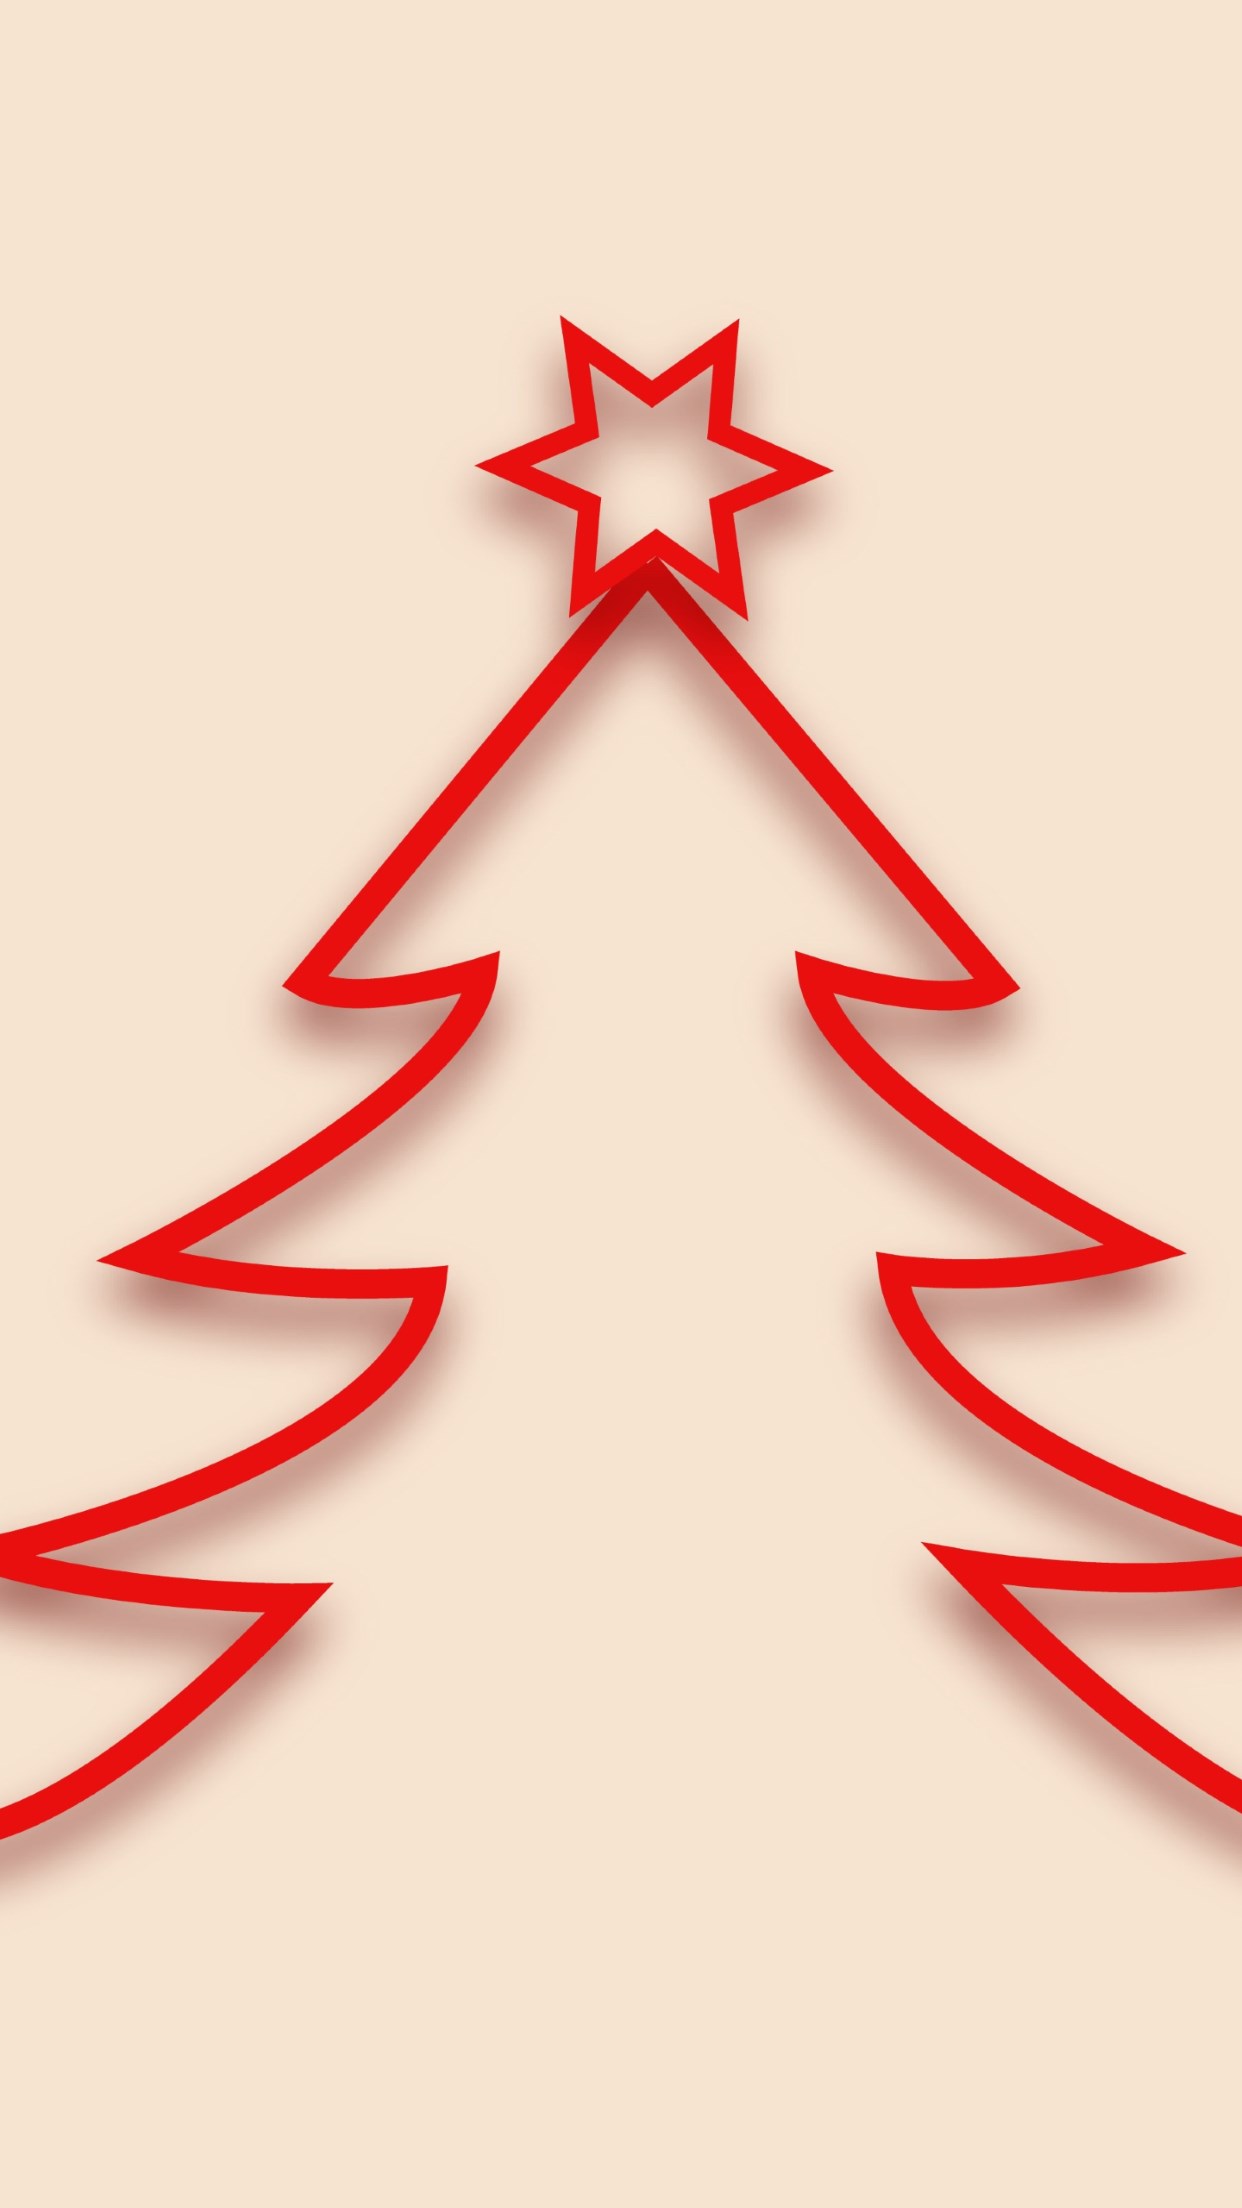 Red minimalistic Christmas tree design wallpaper 1242x2208